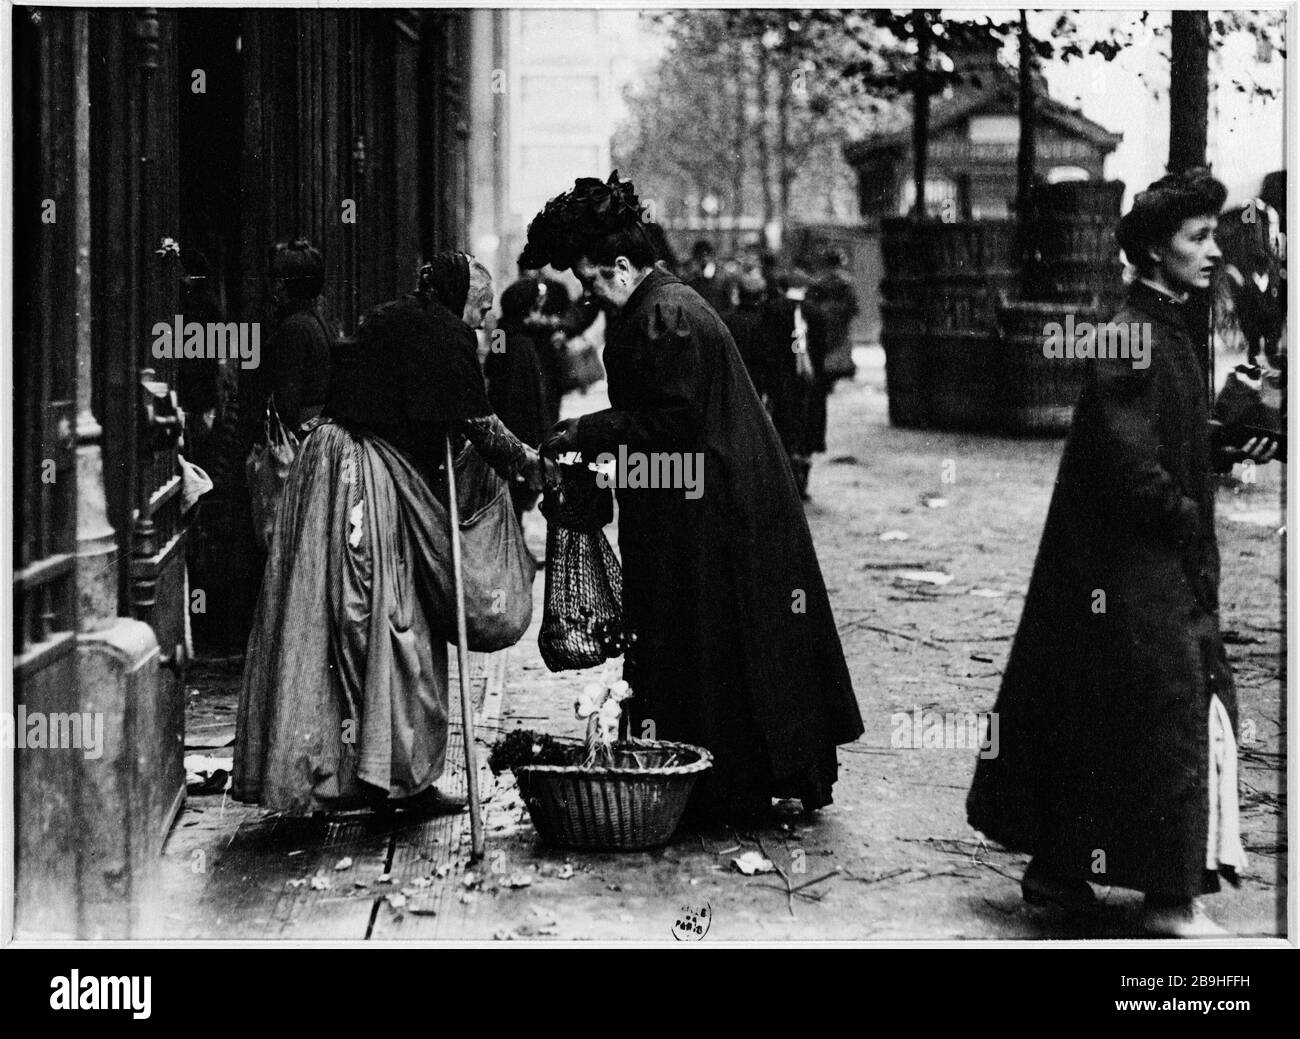 MARKT KRÄUTER UND KNOBLAUCH Marchande d'herbes et d'ail. Paris, Vers 1900. Photographie de Louis Vert (1865-1924). Paris, musée Carnavalet. Stockfoto